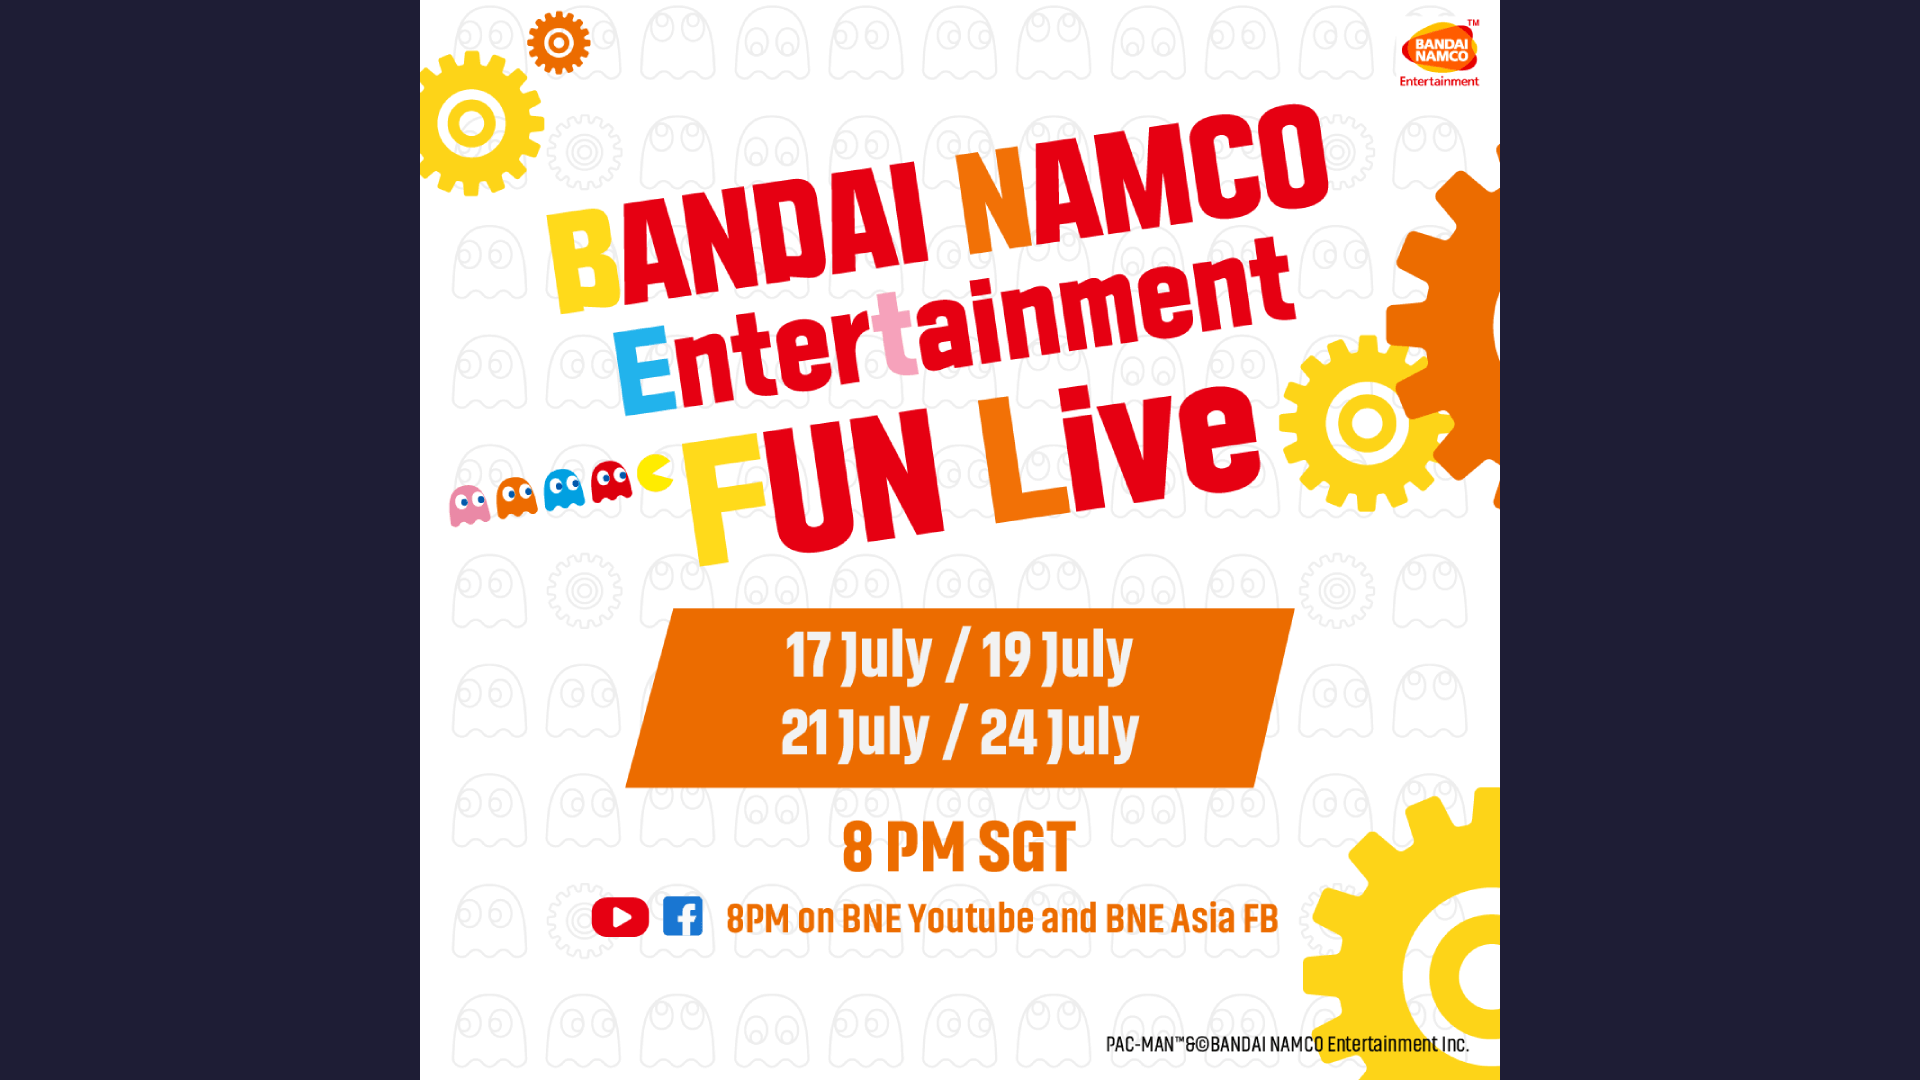 Bandai Namco Announces Fun Live events